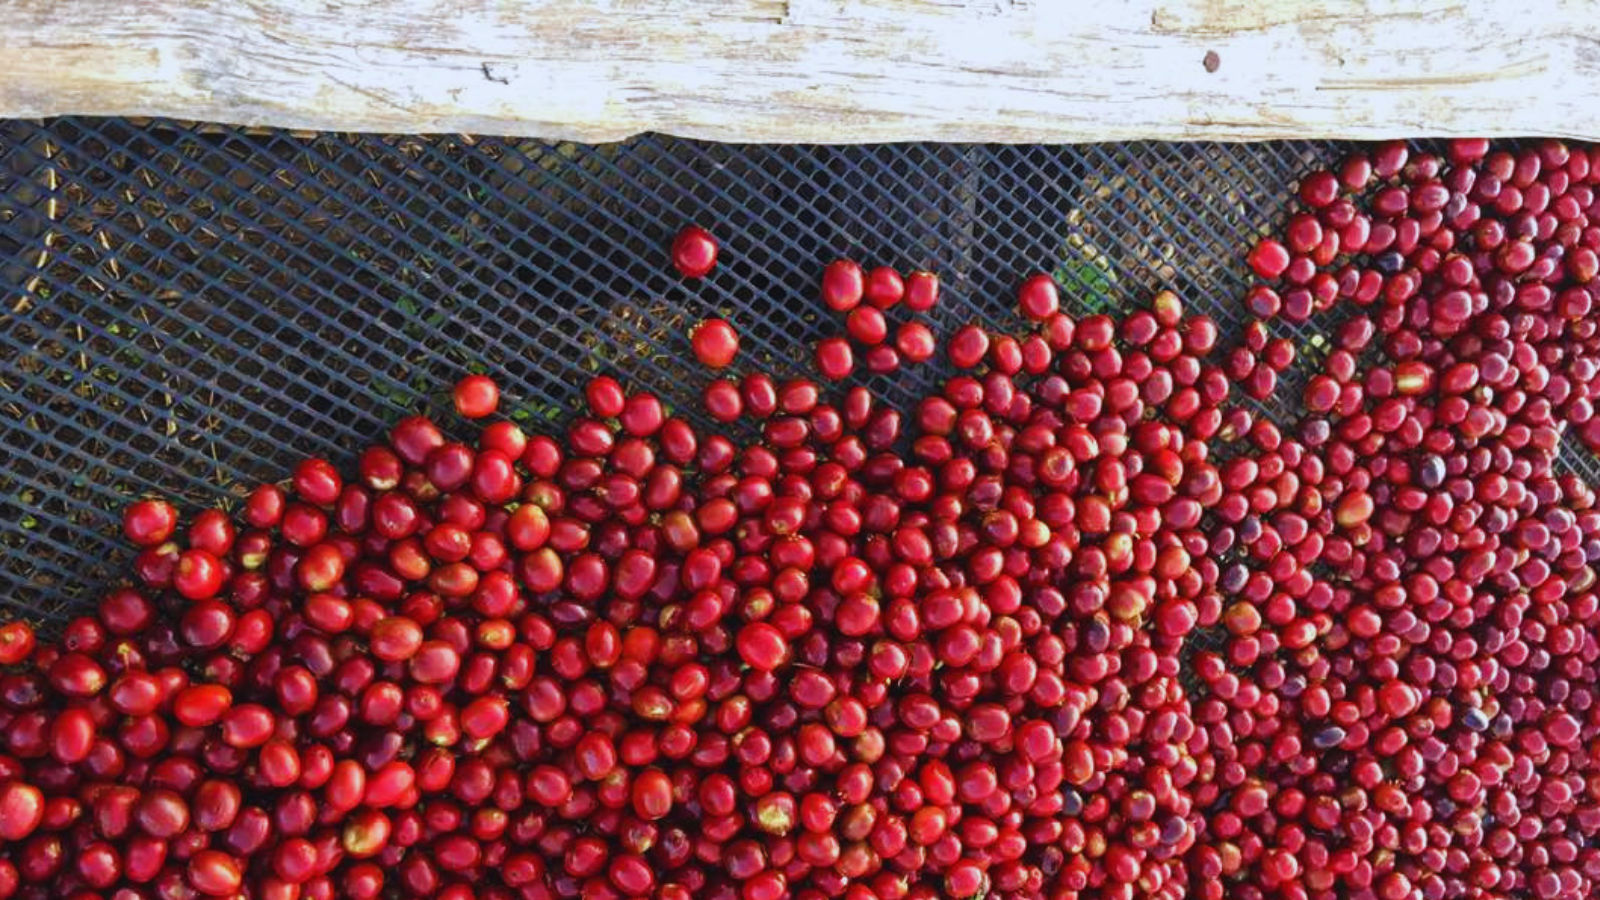 Gesha (Geisha) coffee cherries on raised bed in Ethiopia